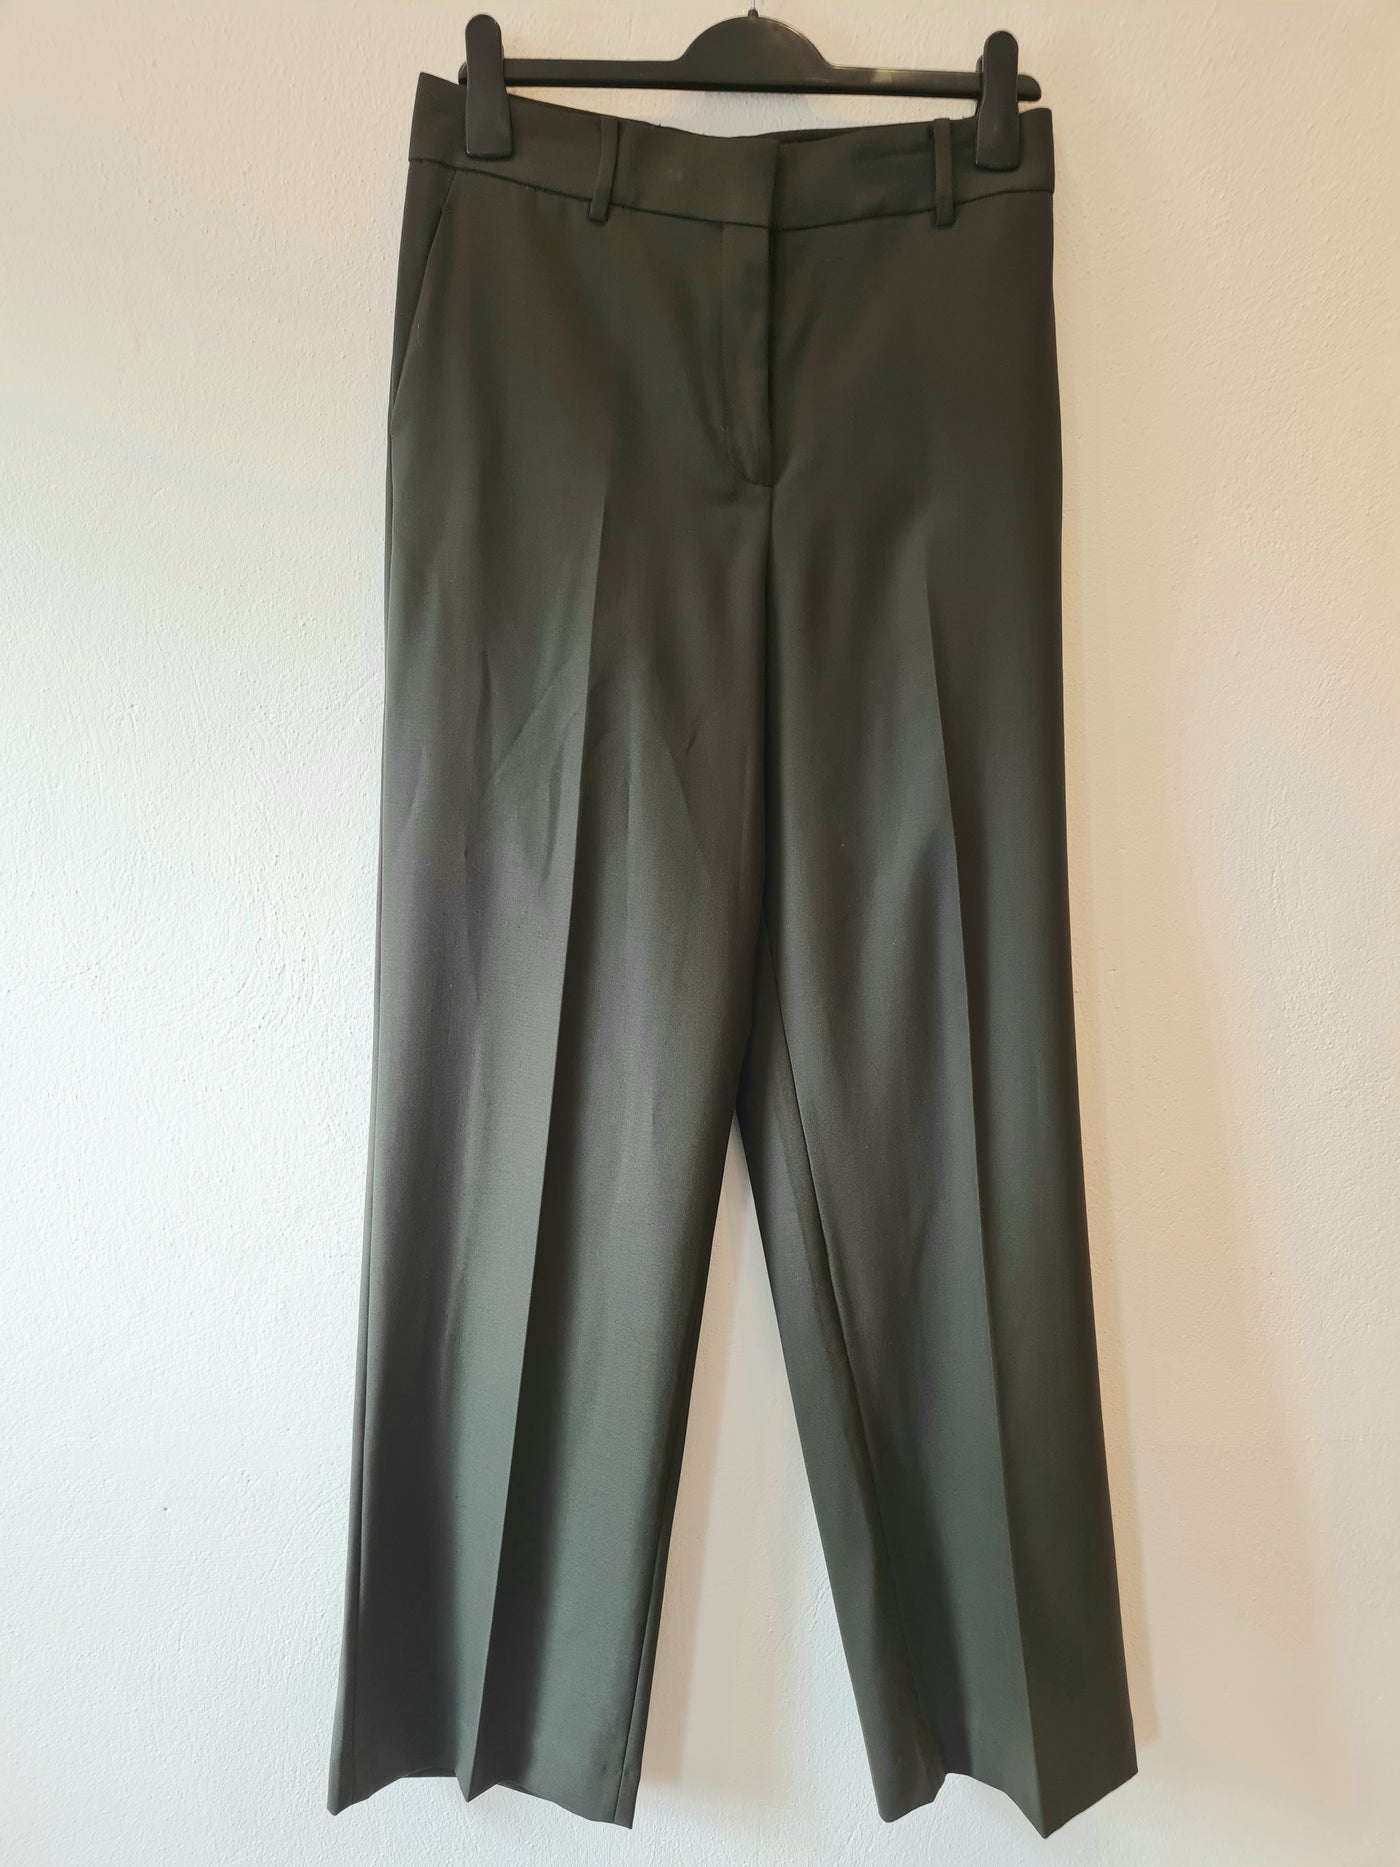 Reiss dark green flared trousers 10